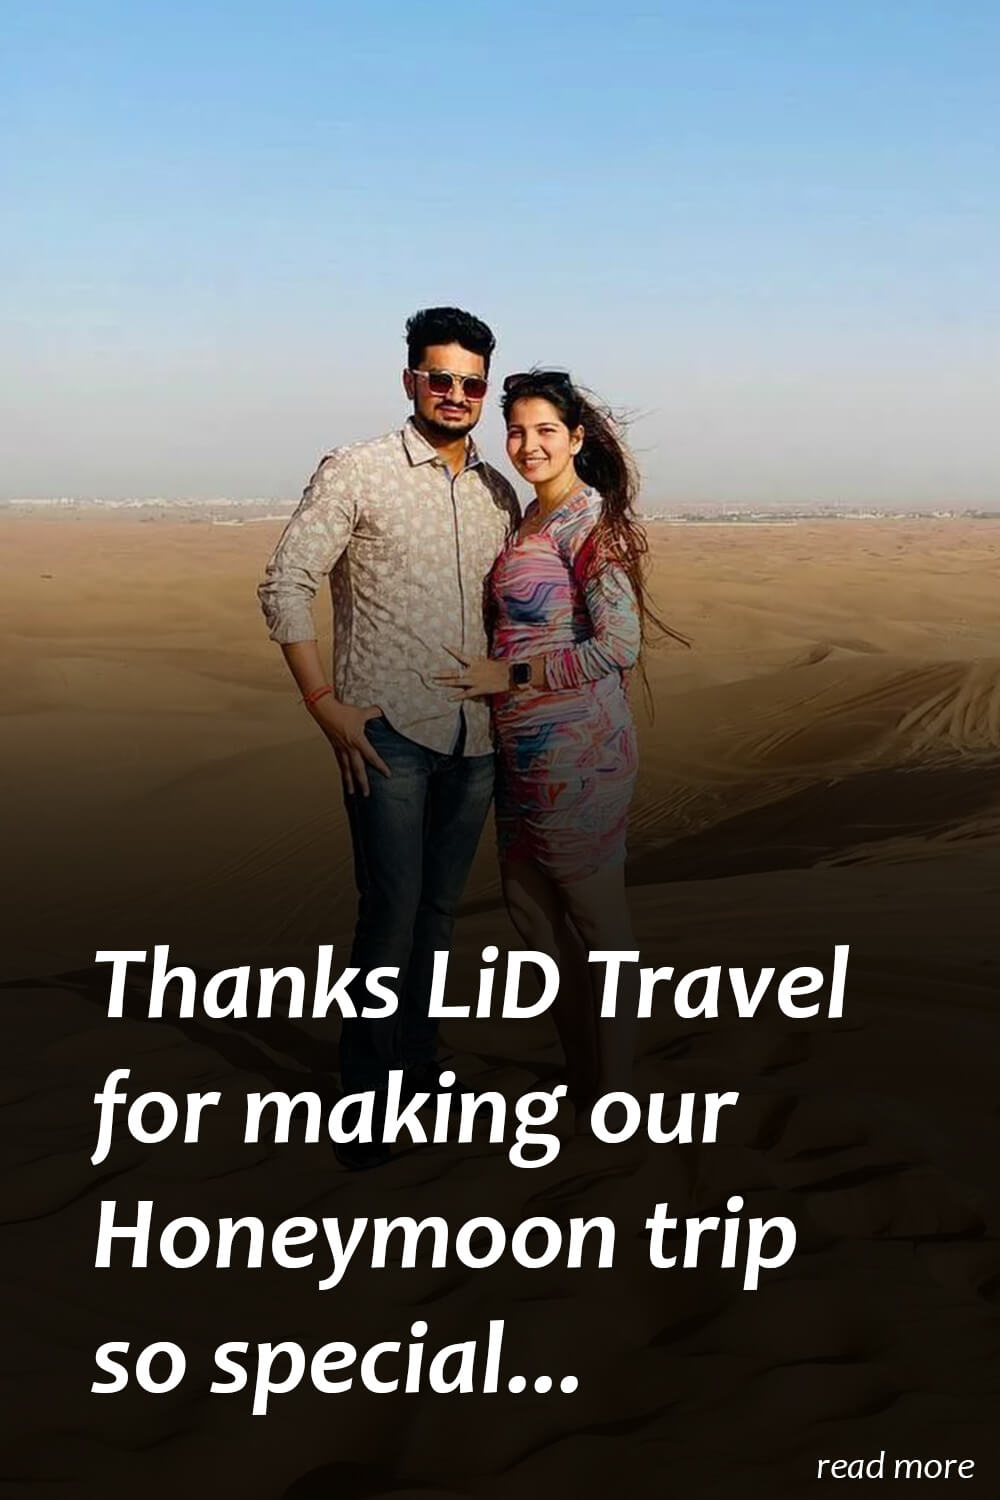 dubai honeymoon tour experience with LiD travel